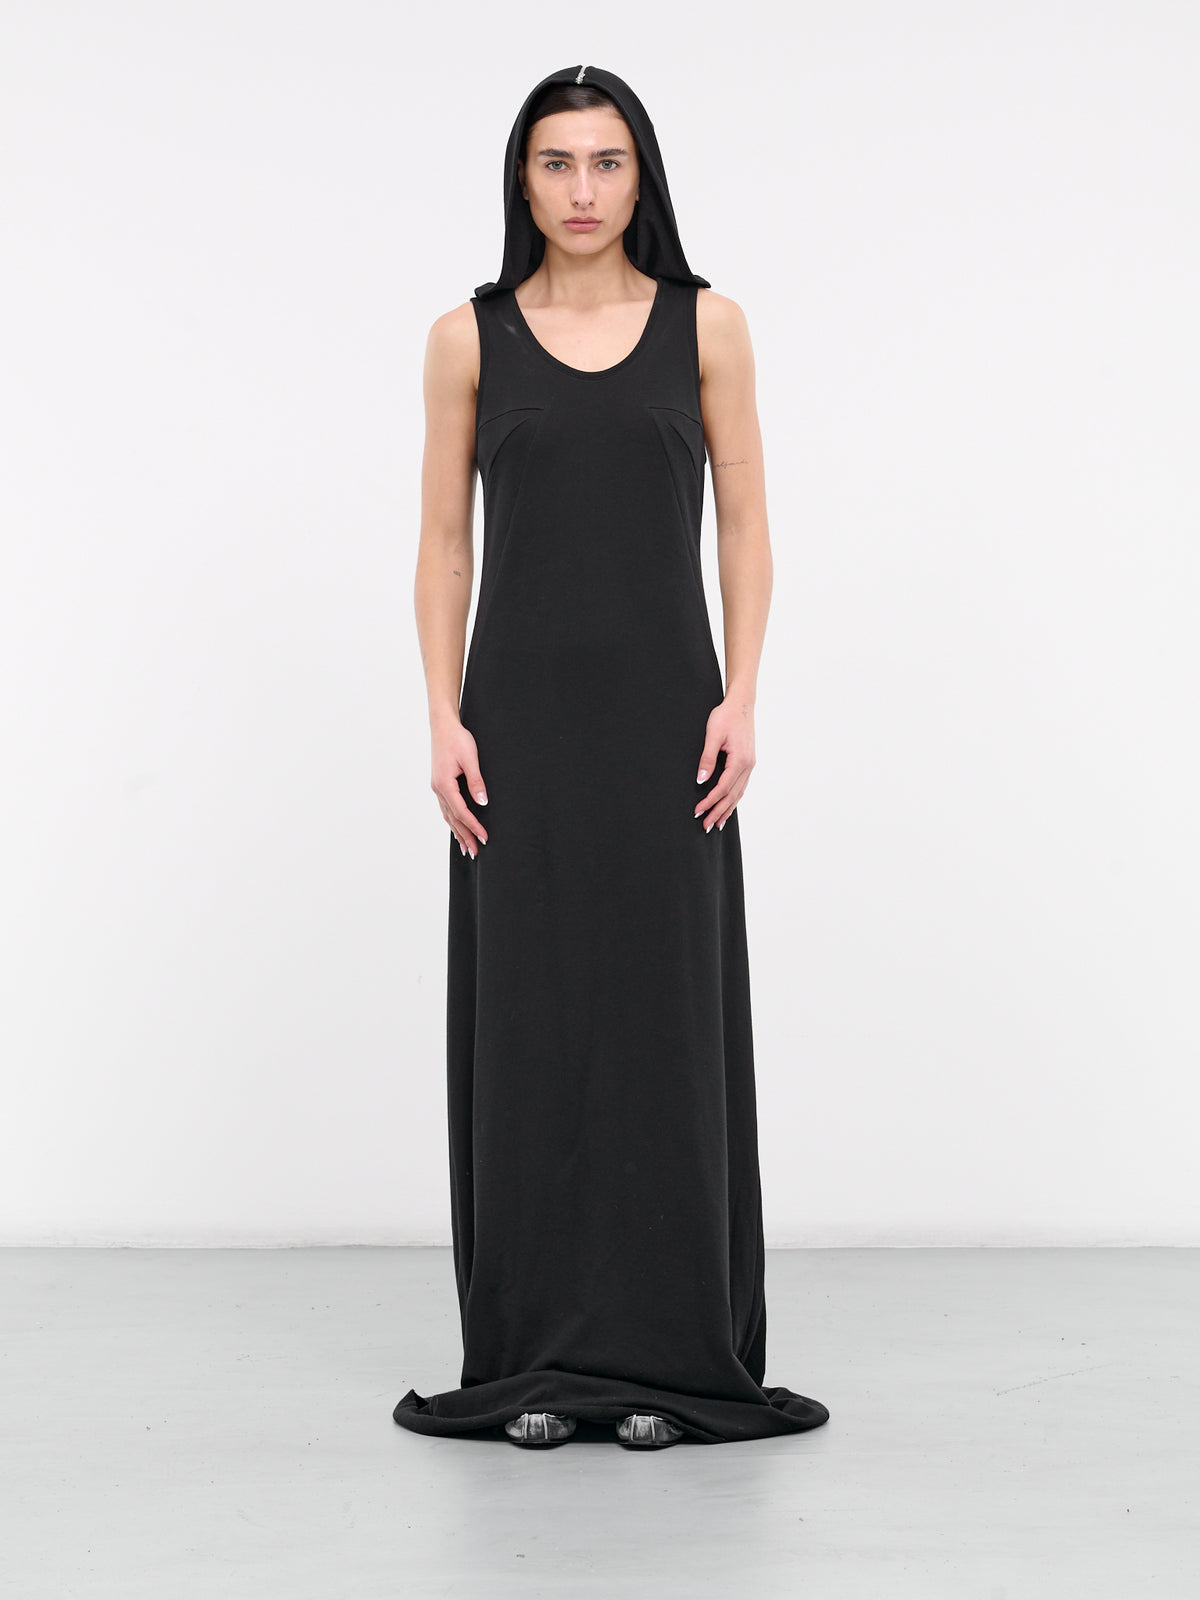 Hooded Long Dress (SY-D12-BLACK)